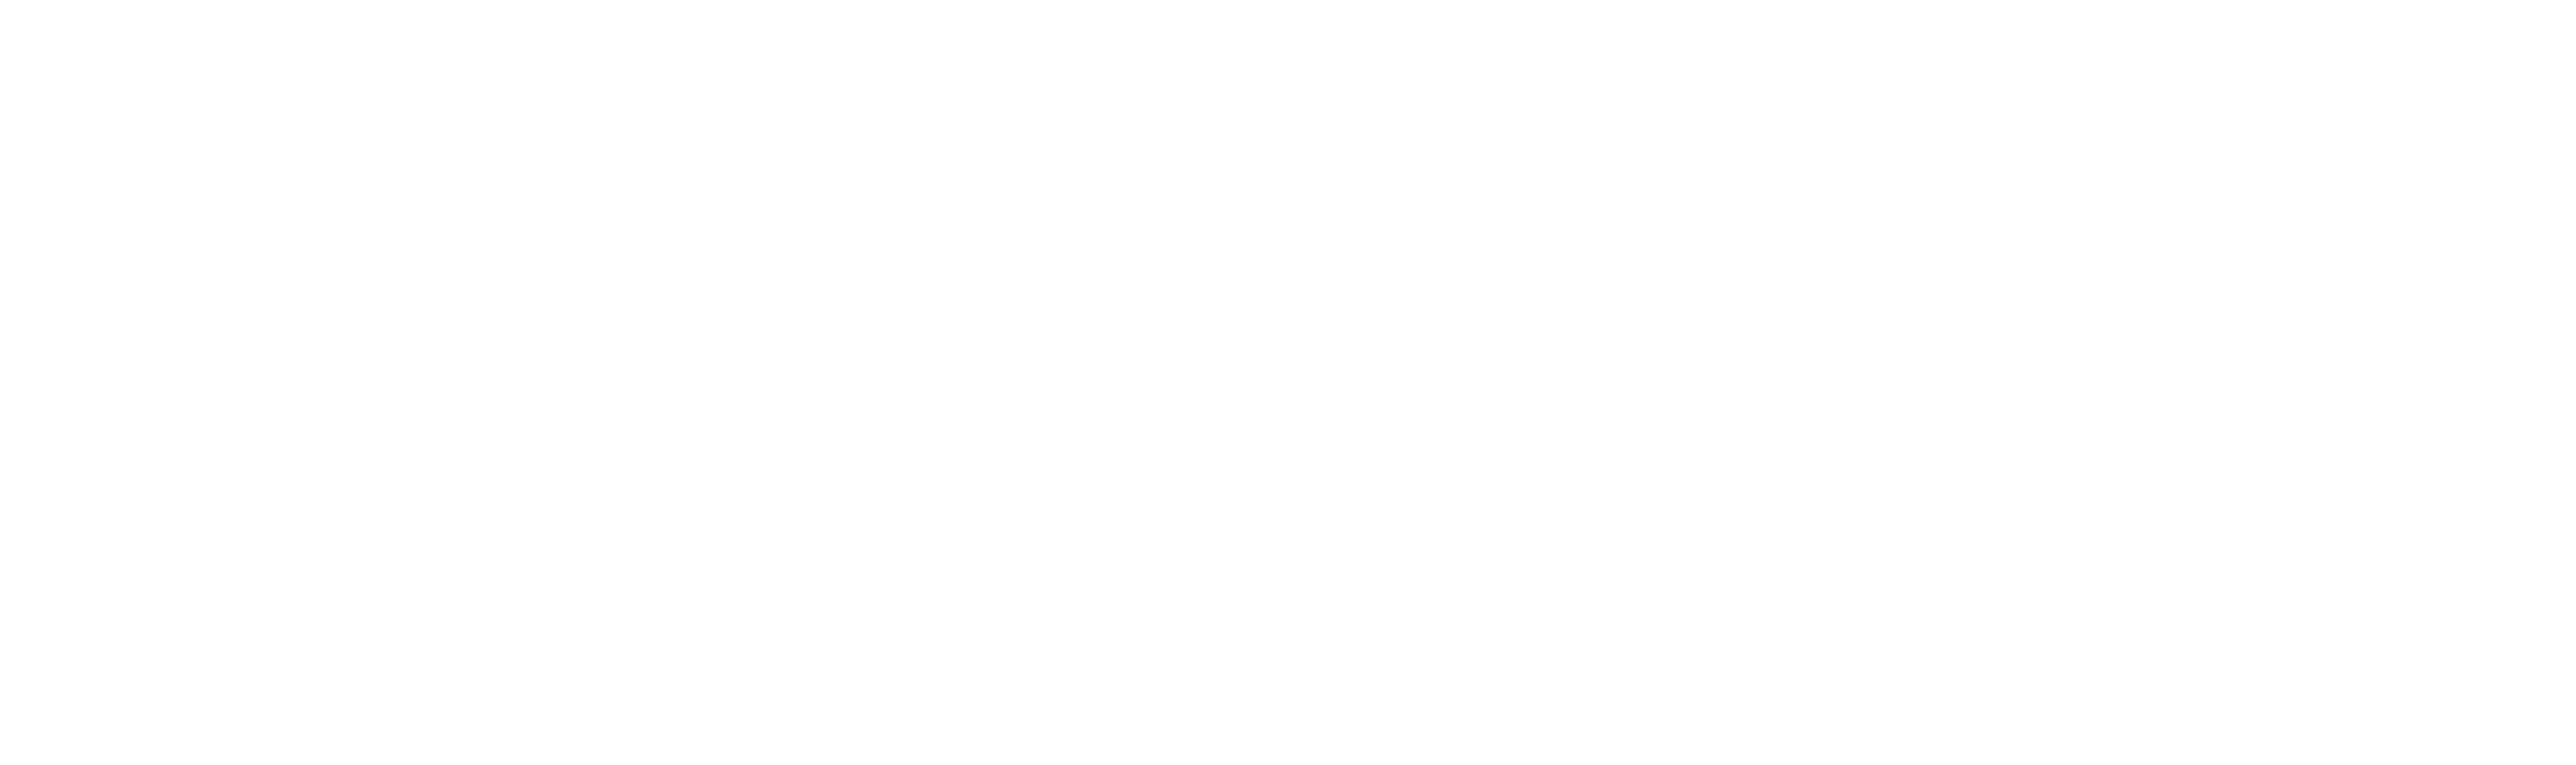 Murphy Medical Supply